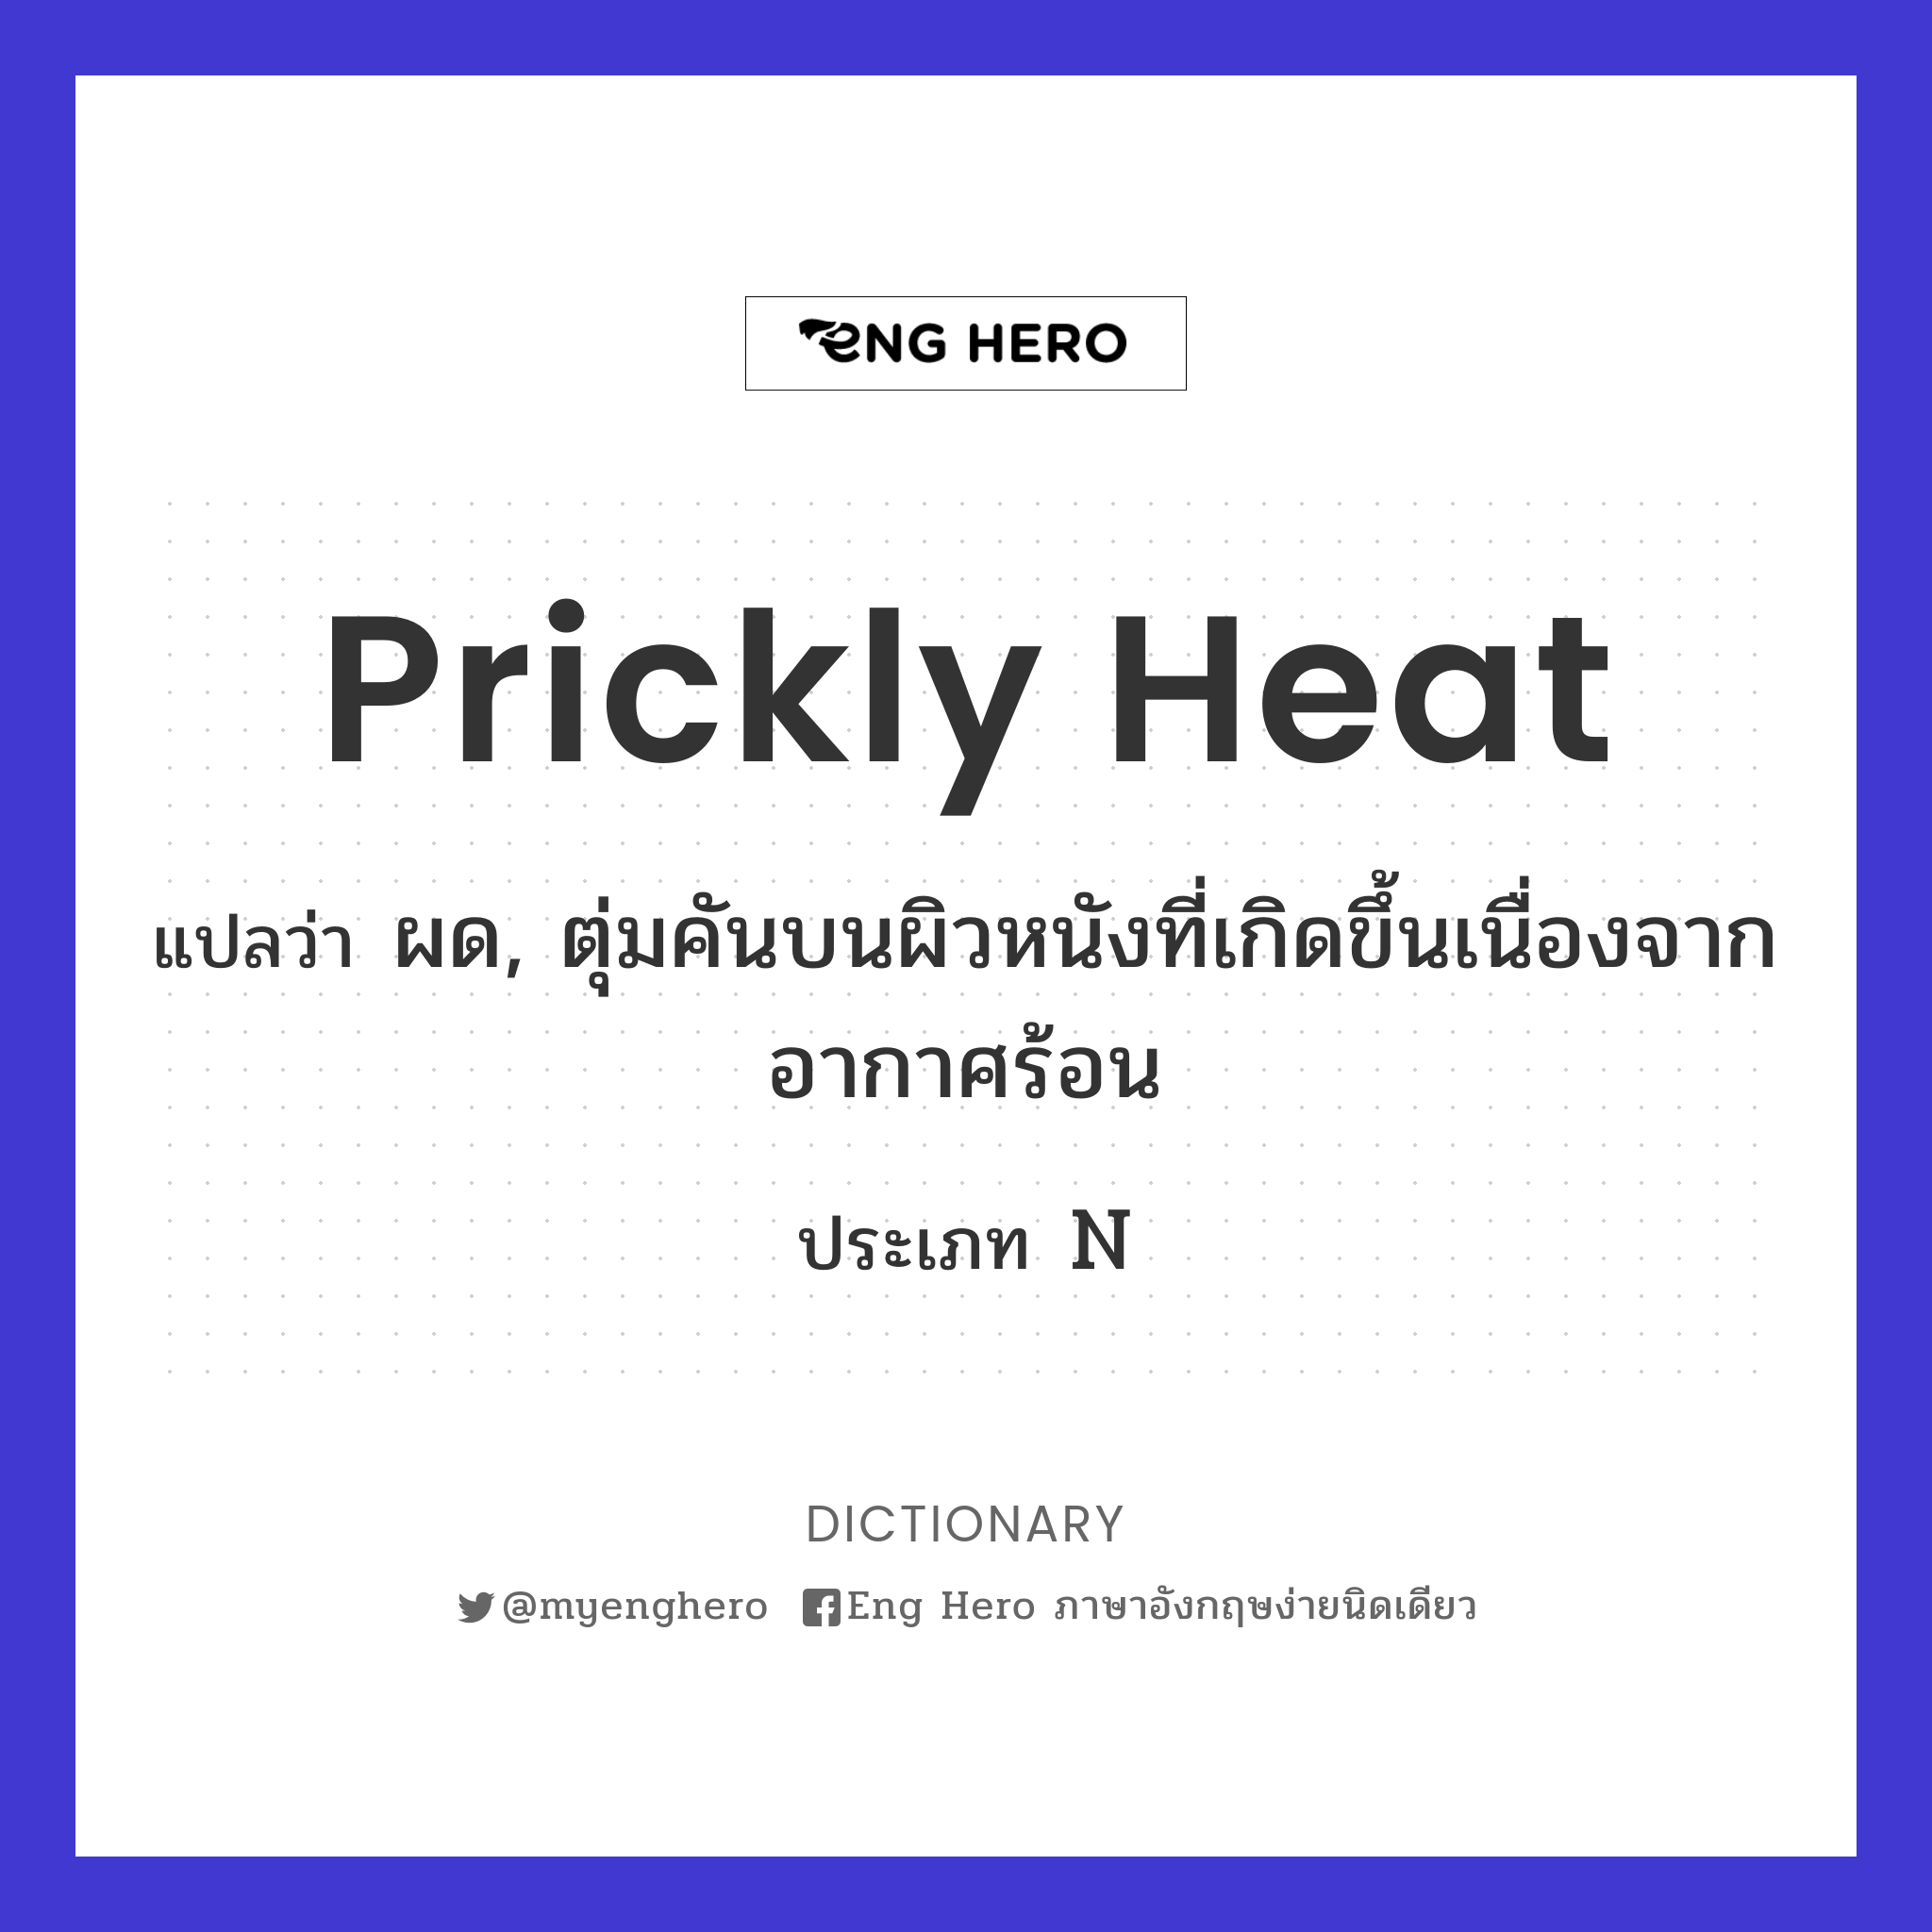 prickly heat